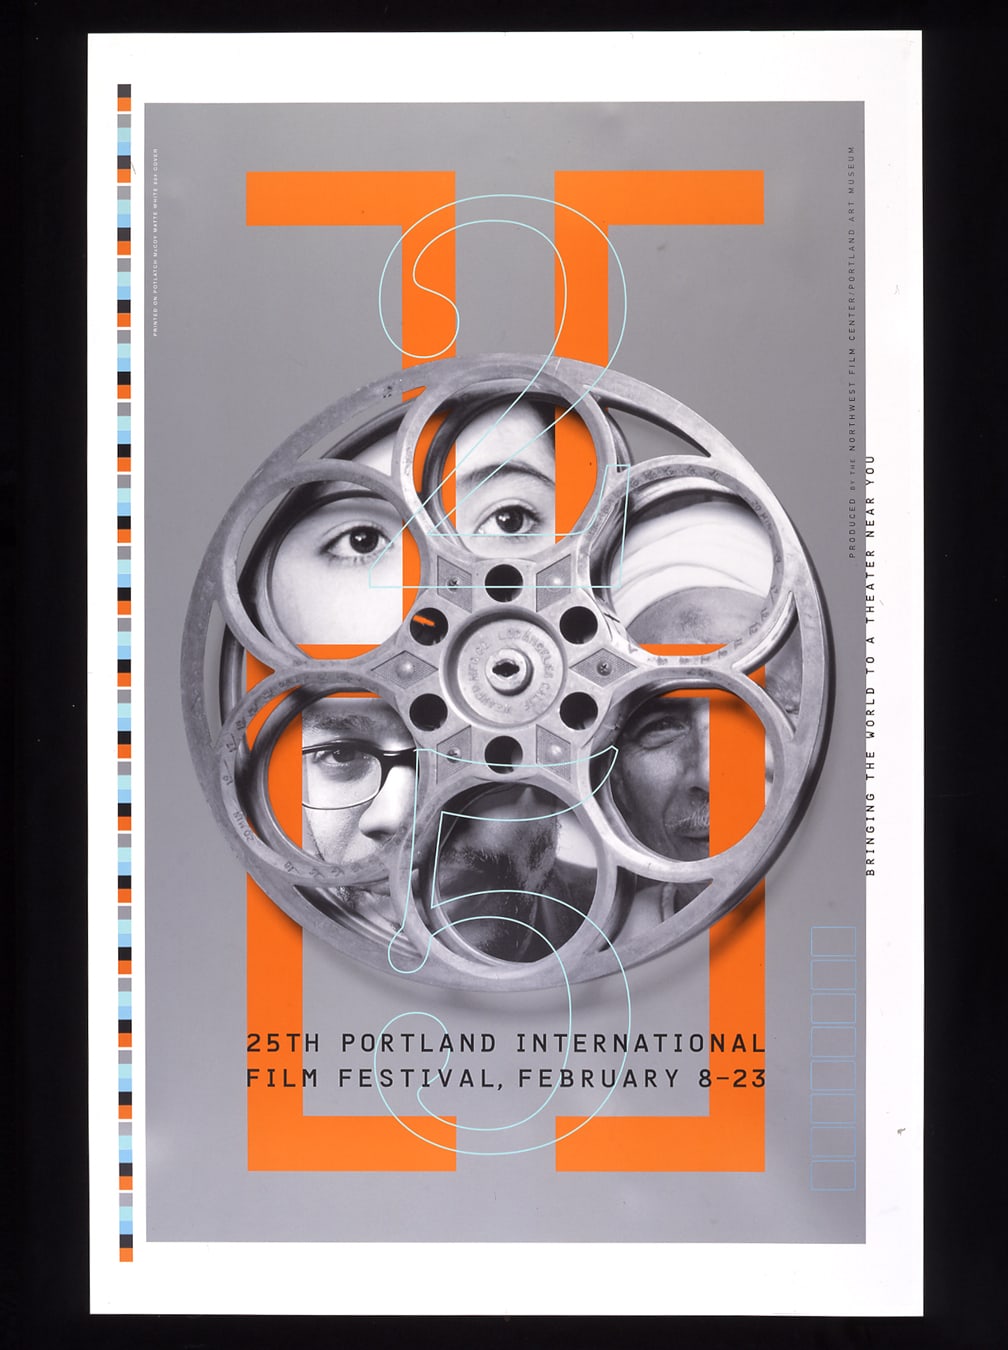 25th Portland International Film Festival Poster design